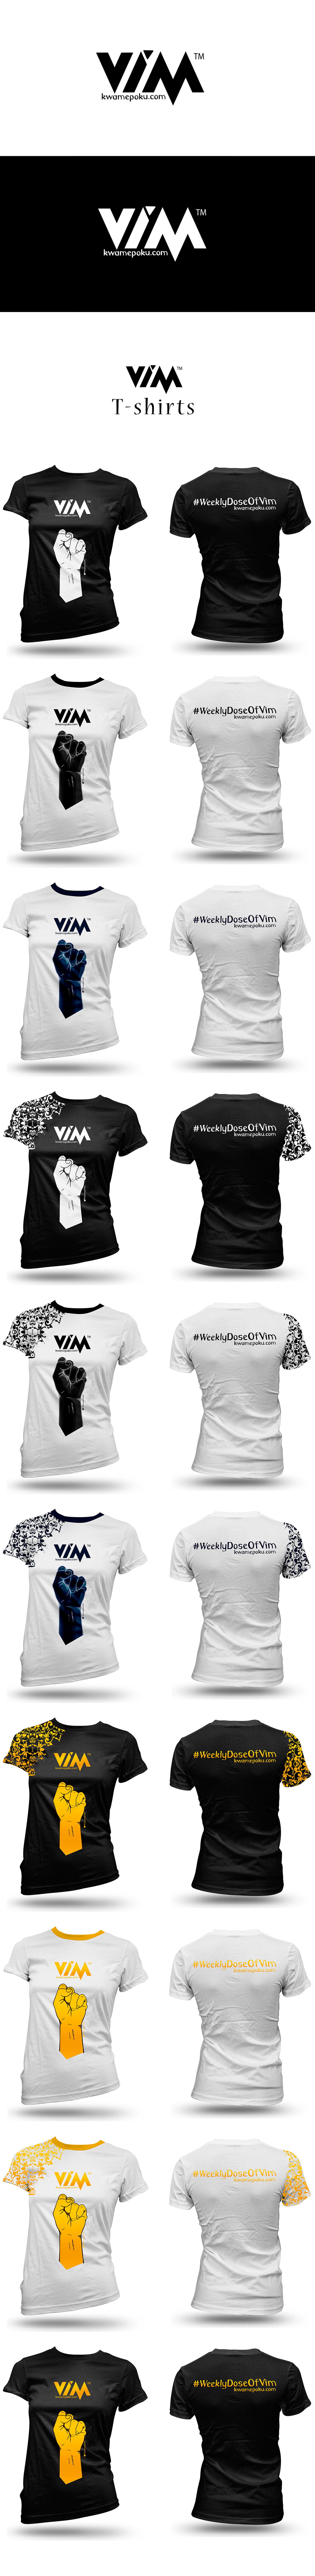 Kwame Poku scientific VIM #VIM White black design T Shirt shirt cloth #WeeklyDoseOfVim graphic knust tech